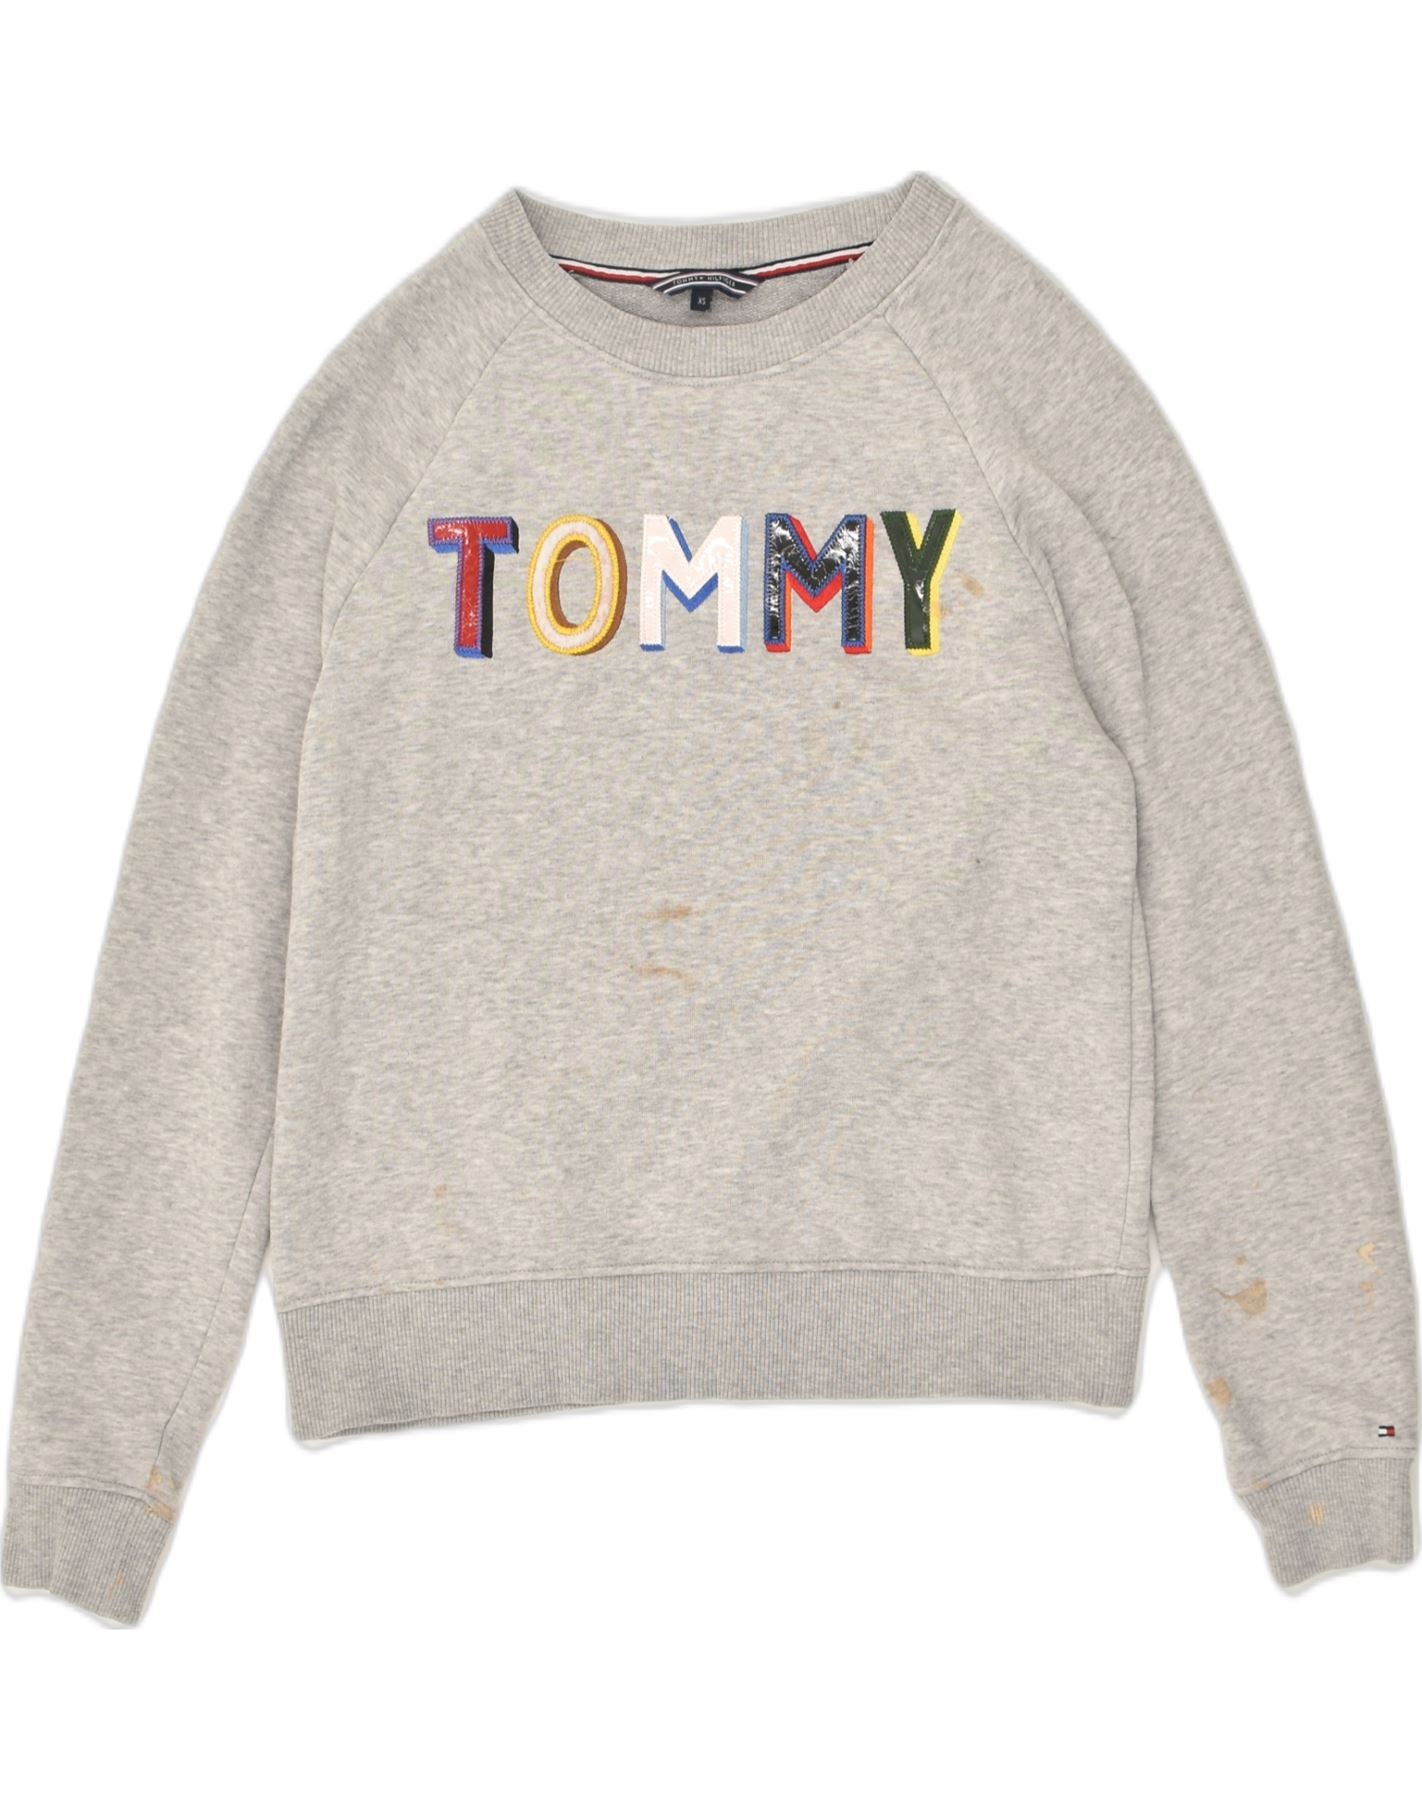 TOMMY HILFIGER Womens Graphic Sweatshirt Jumper UK 4 XS Grey